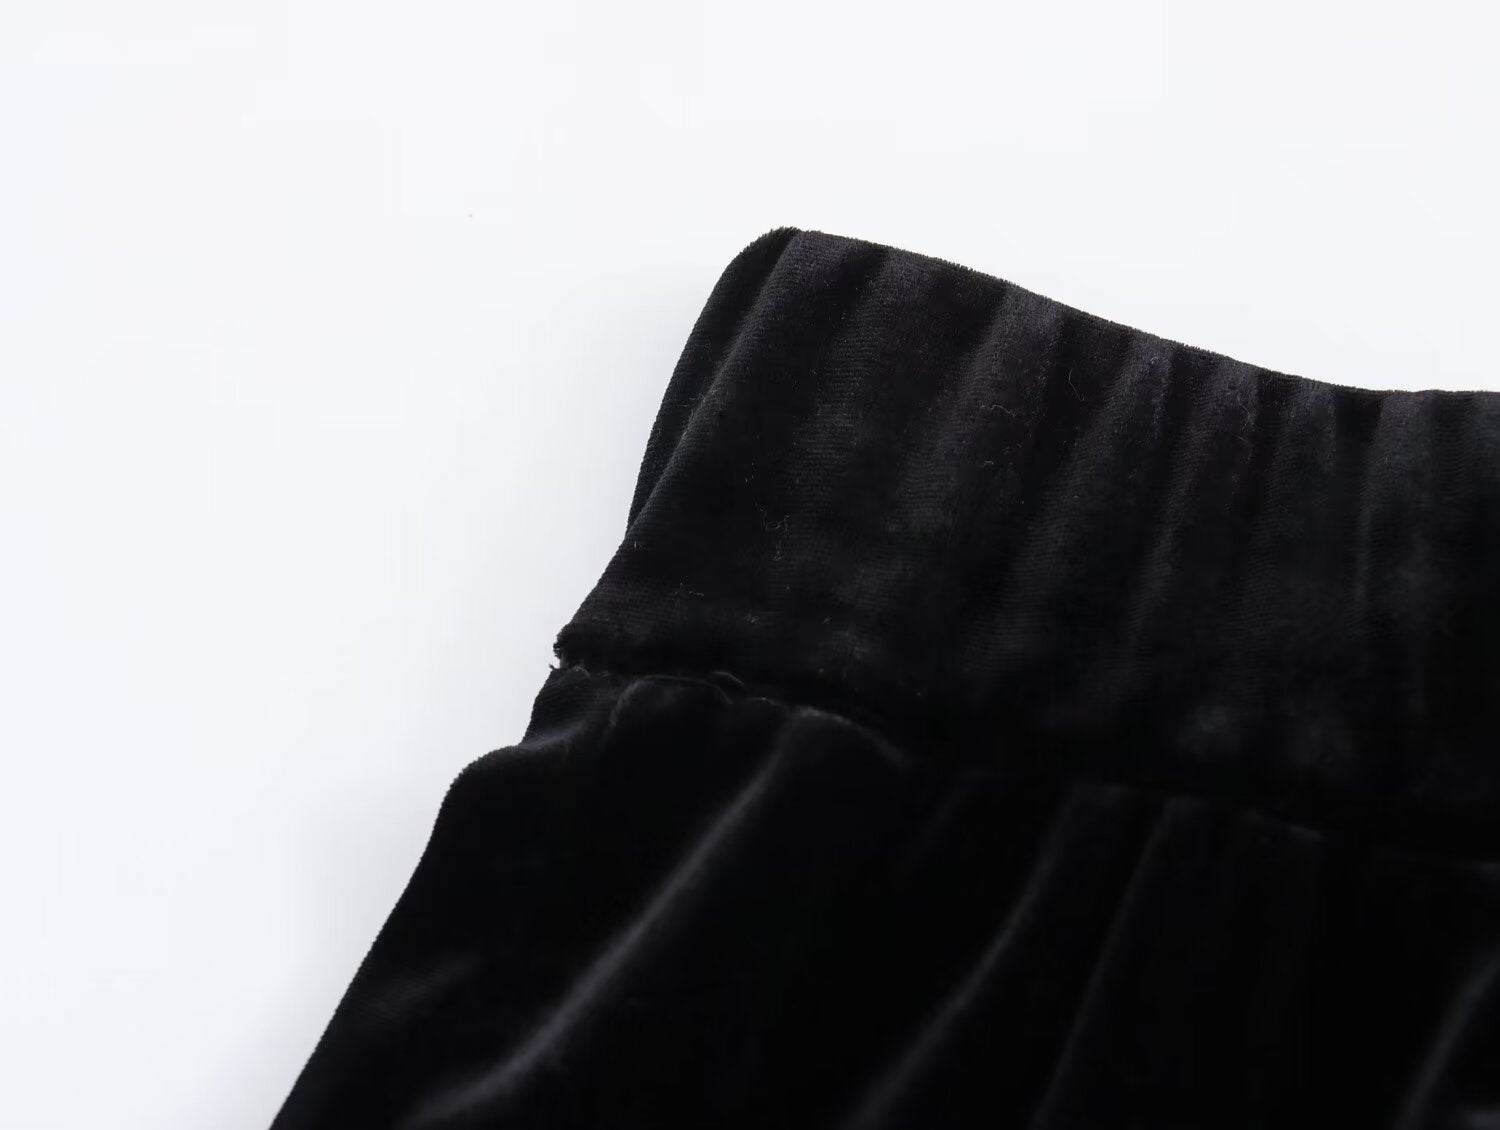 Straight Midi Dress Thick Warm Retro Winter Black with Extra Lining Pleuche Skirt Women Dress